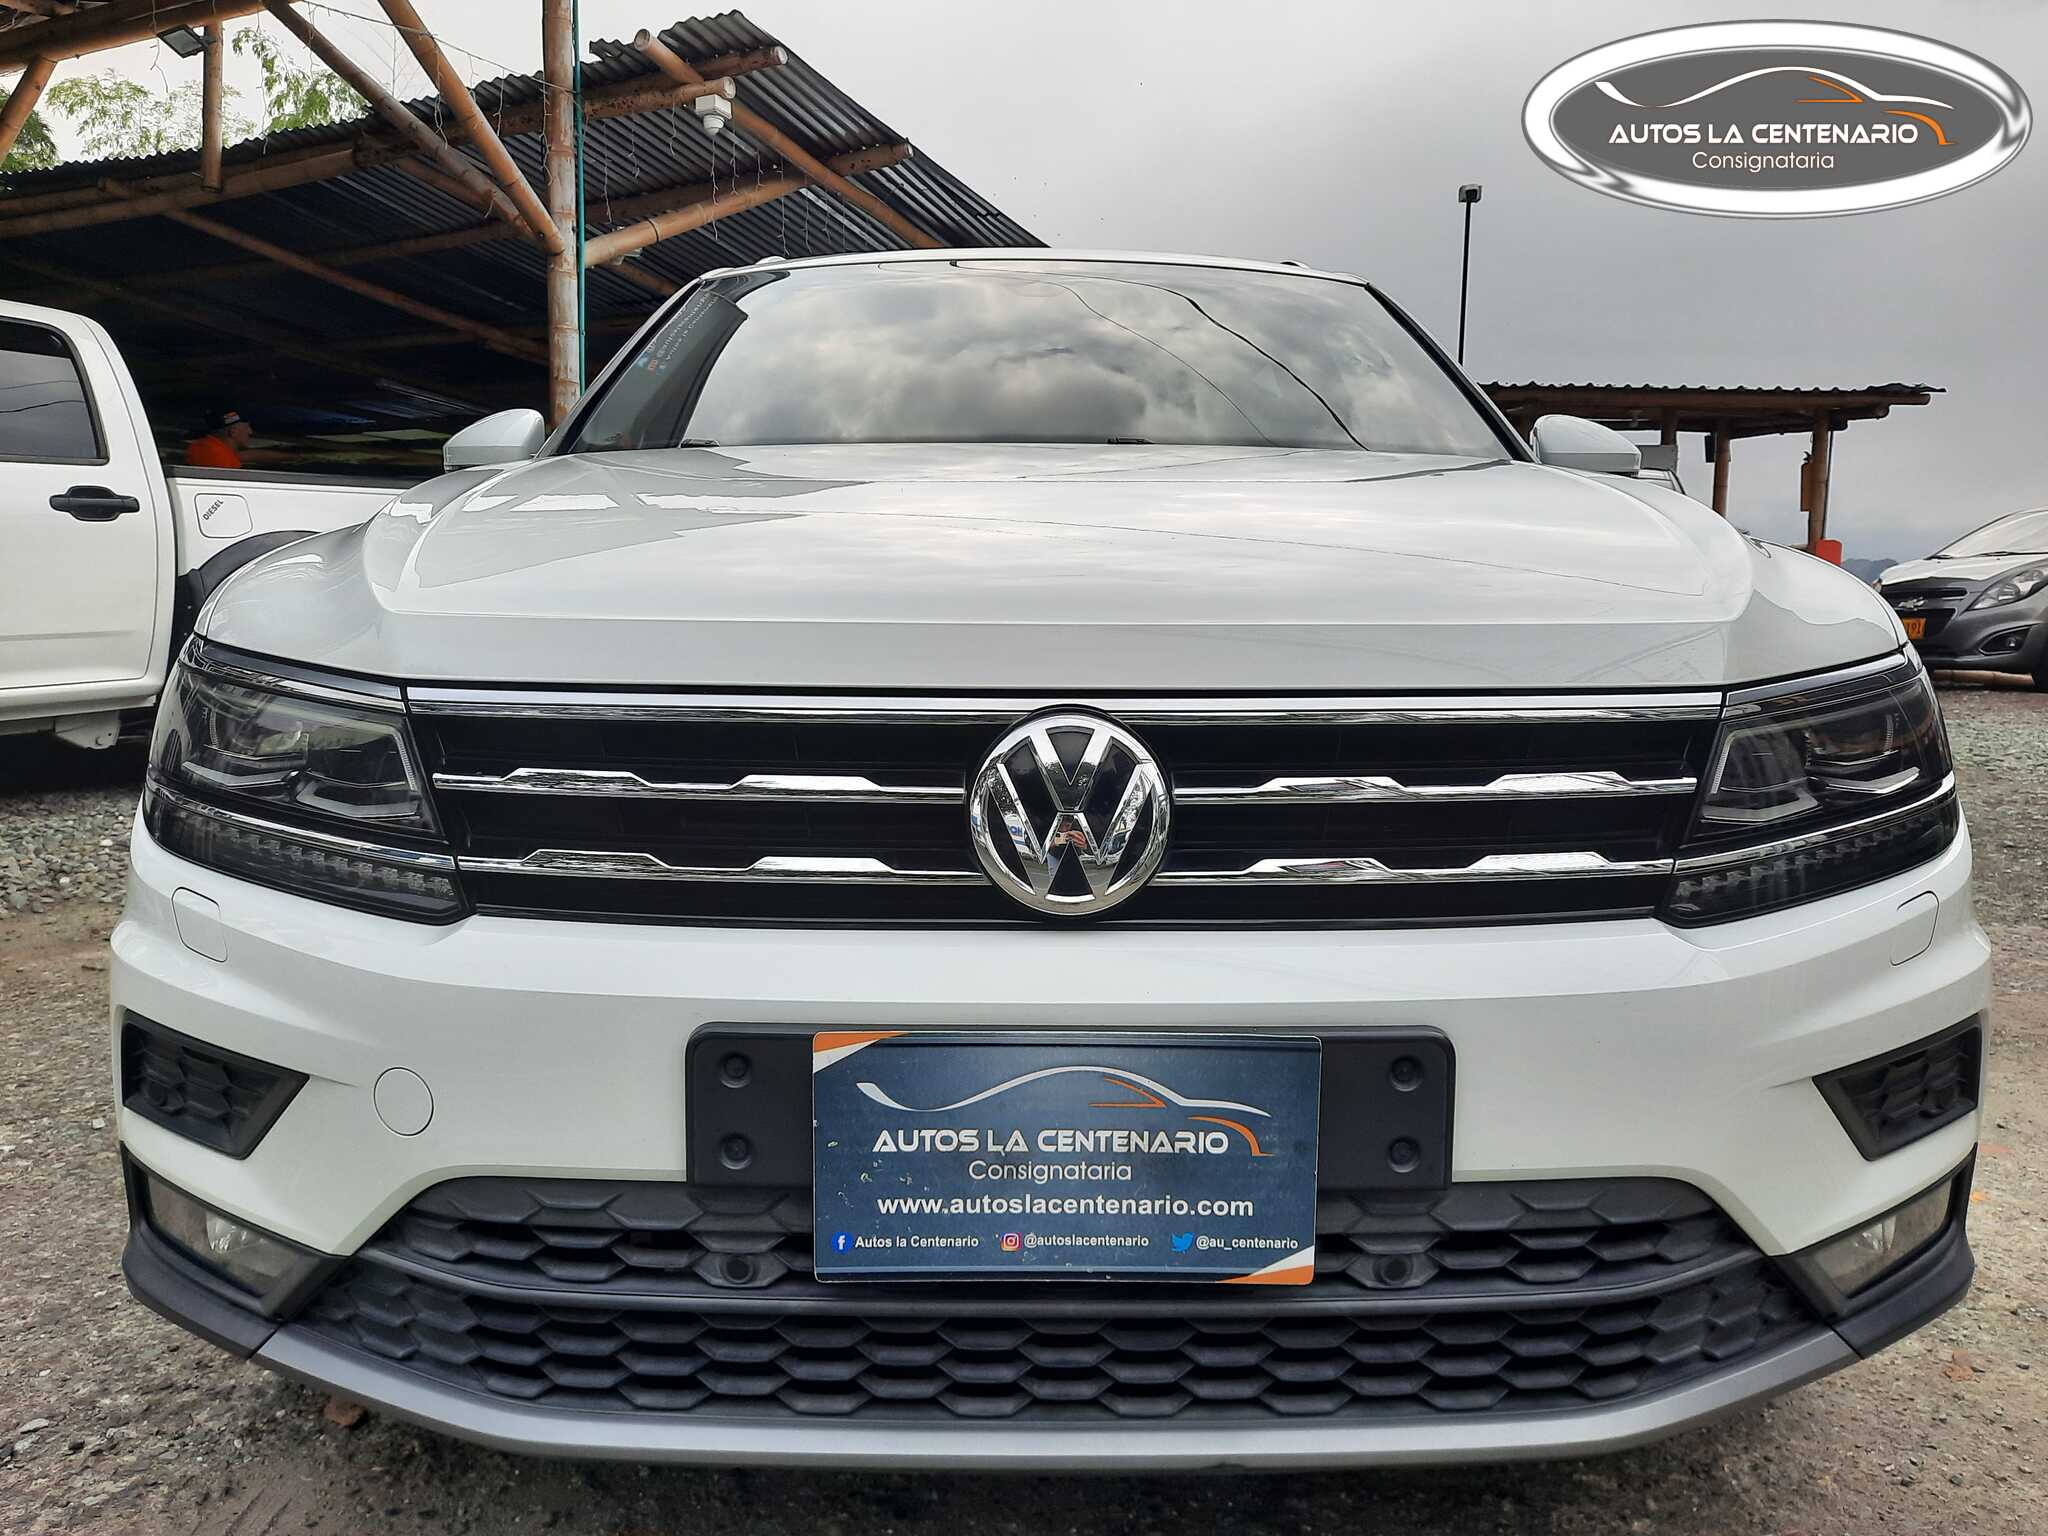 Volkswagen-TIGUAN COMFORTLINE AT 4X4 2.0CC TURBO 7 PUESTOS 4MOTION